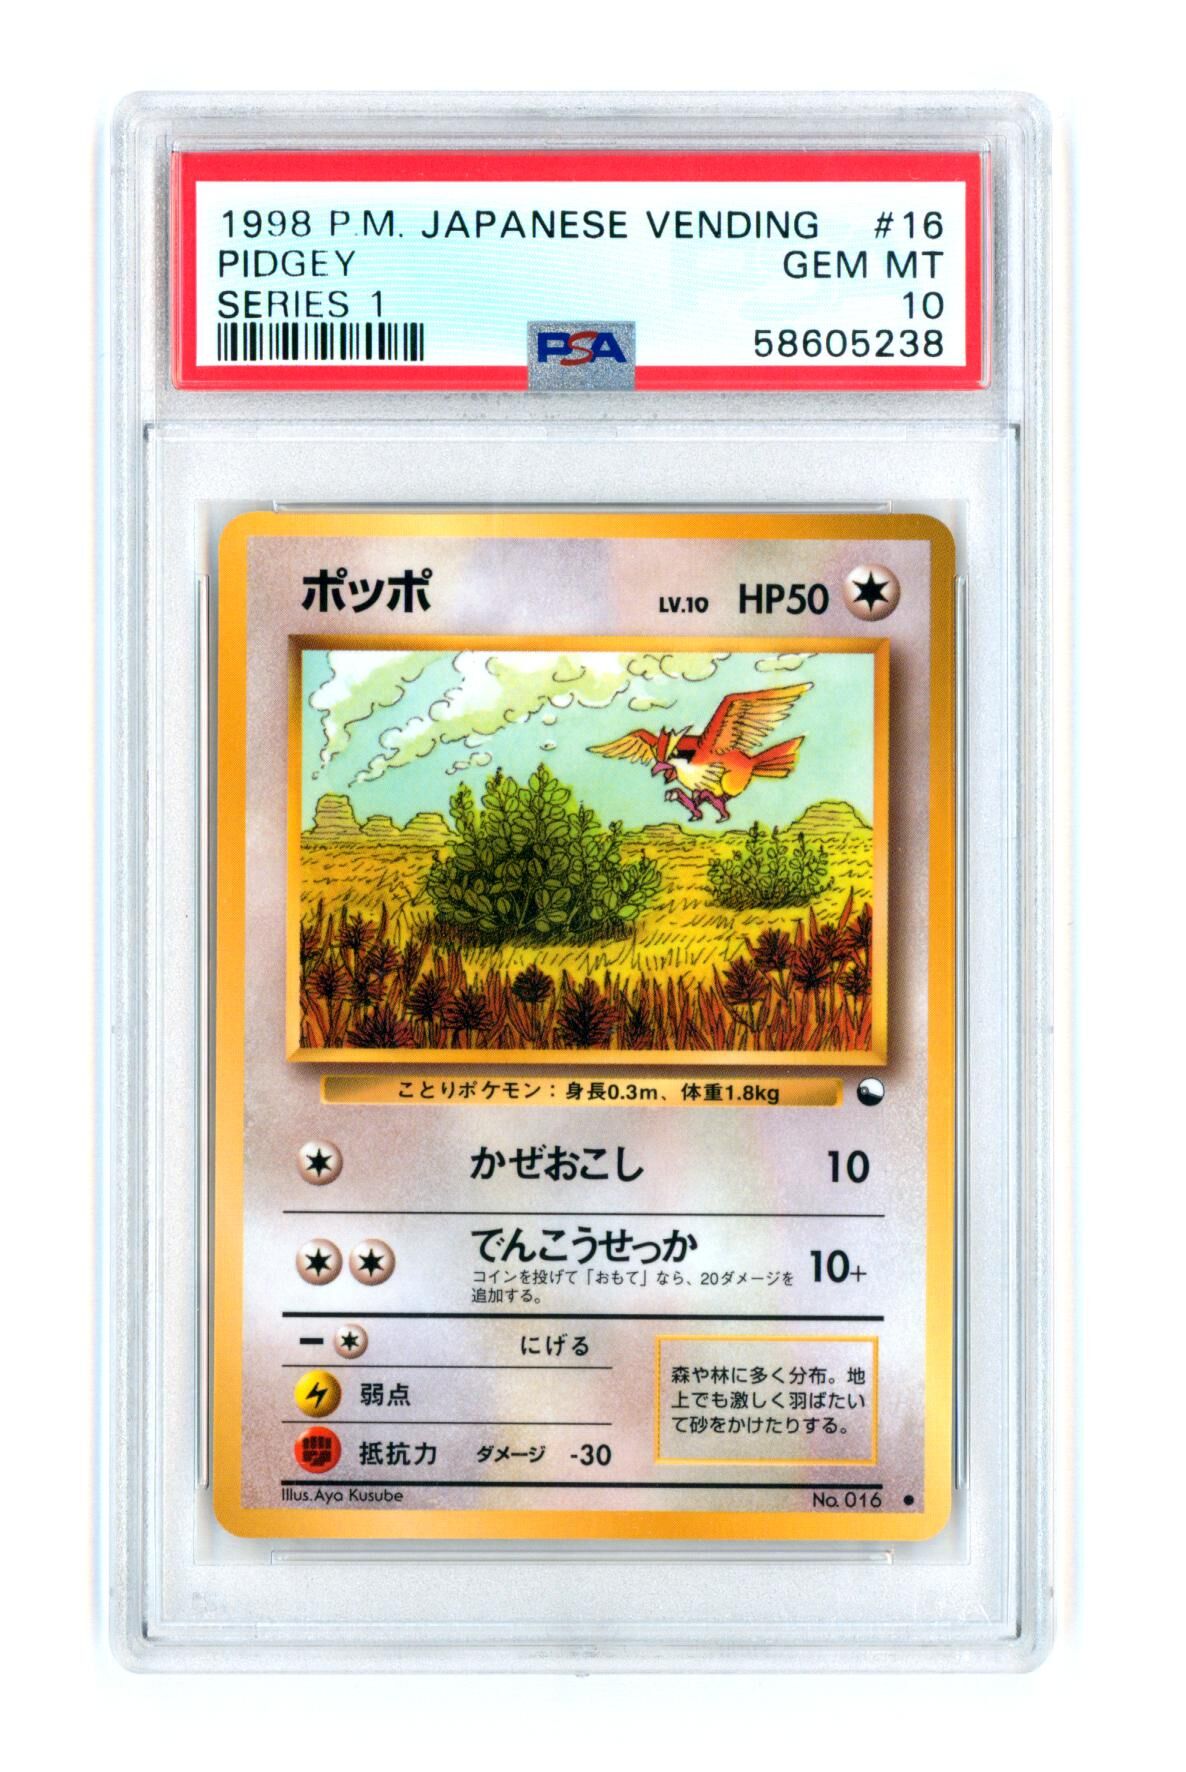 Pidgey #16 - Series 1 - Japanese Vending - PSA 10 GEM-MT - Pokémon